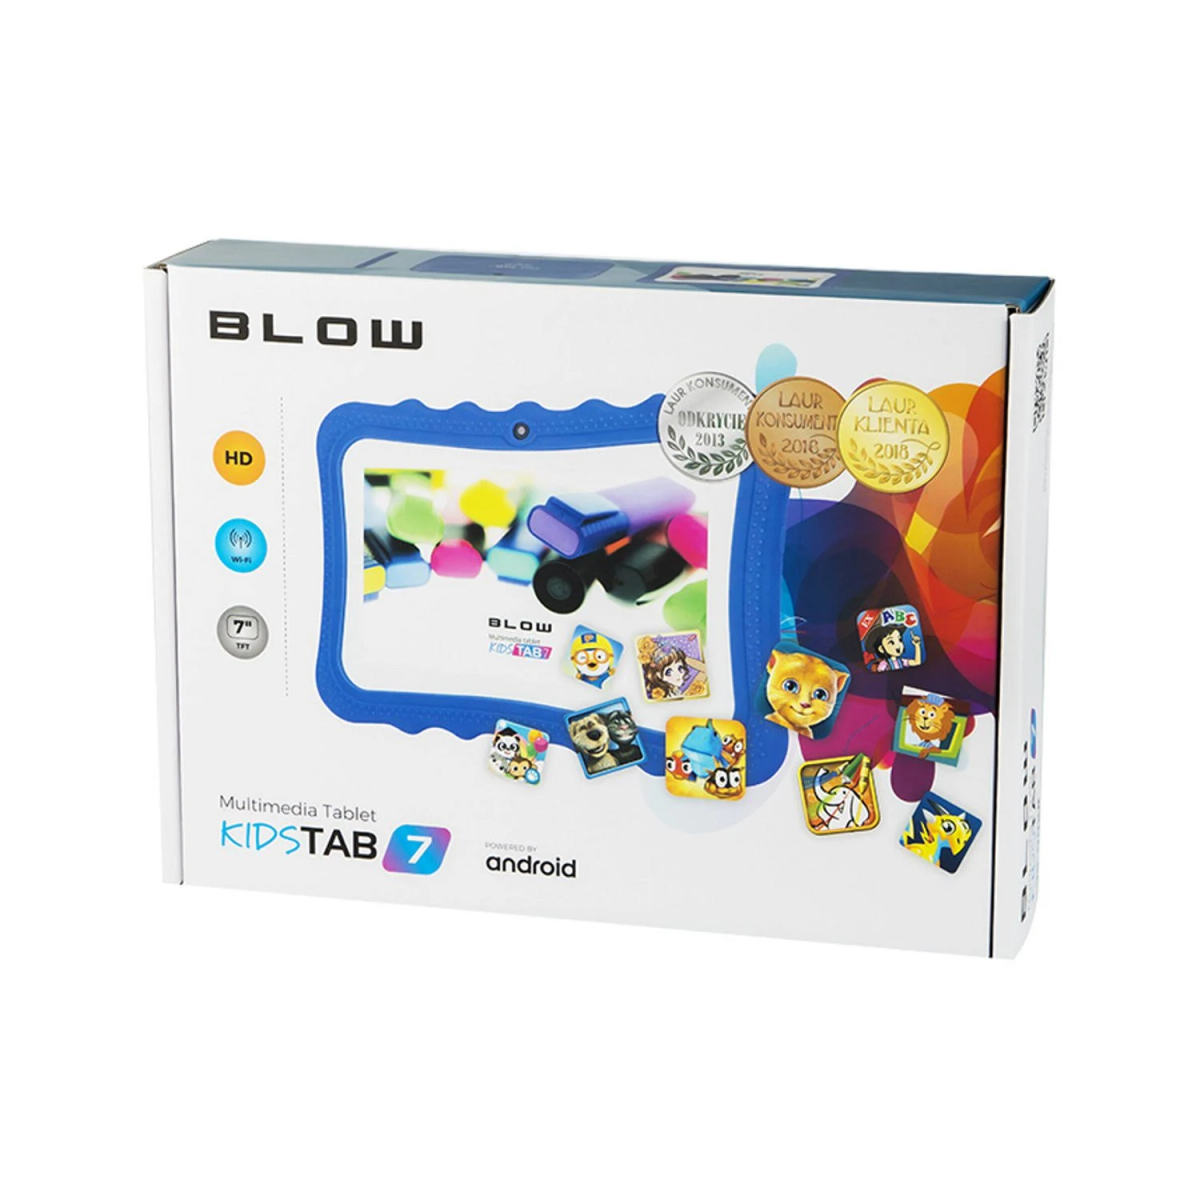 BLOW KidsTab 7 2/32 GB, Blau GB, 7 16 Zoll, Tablet